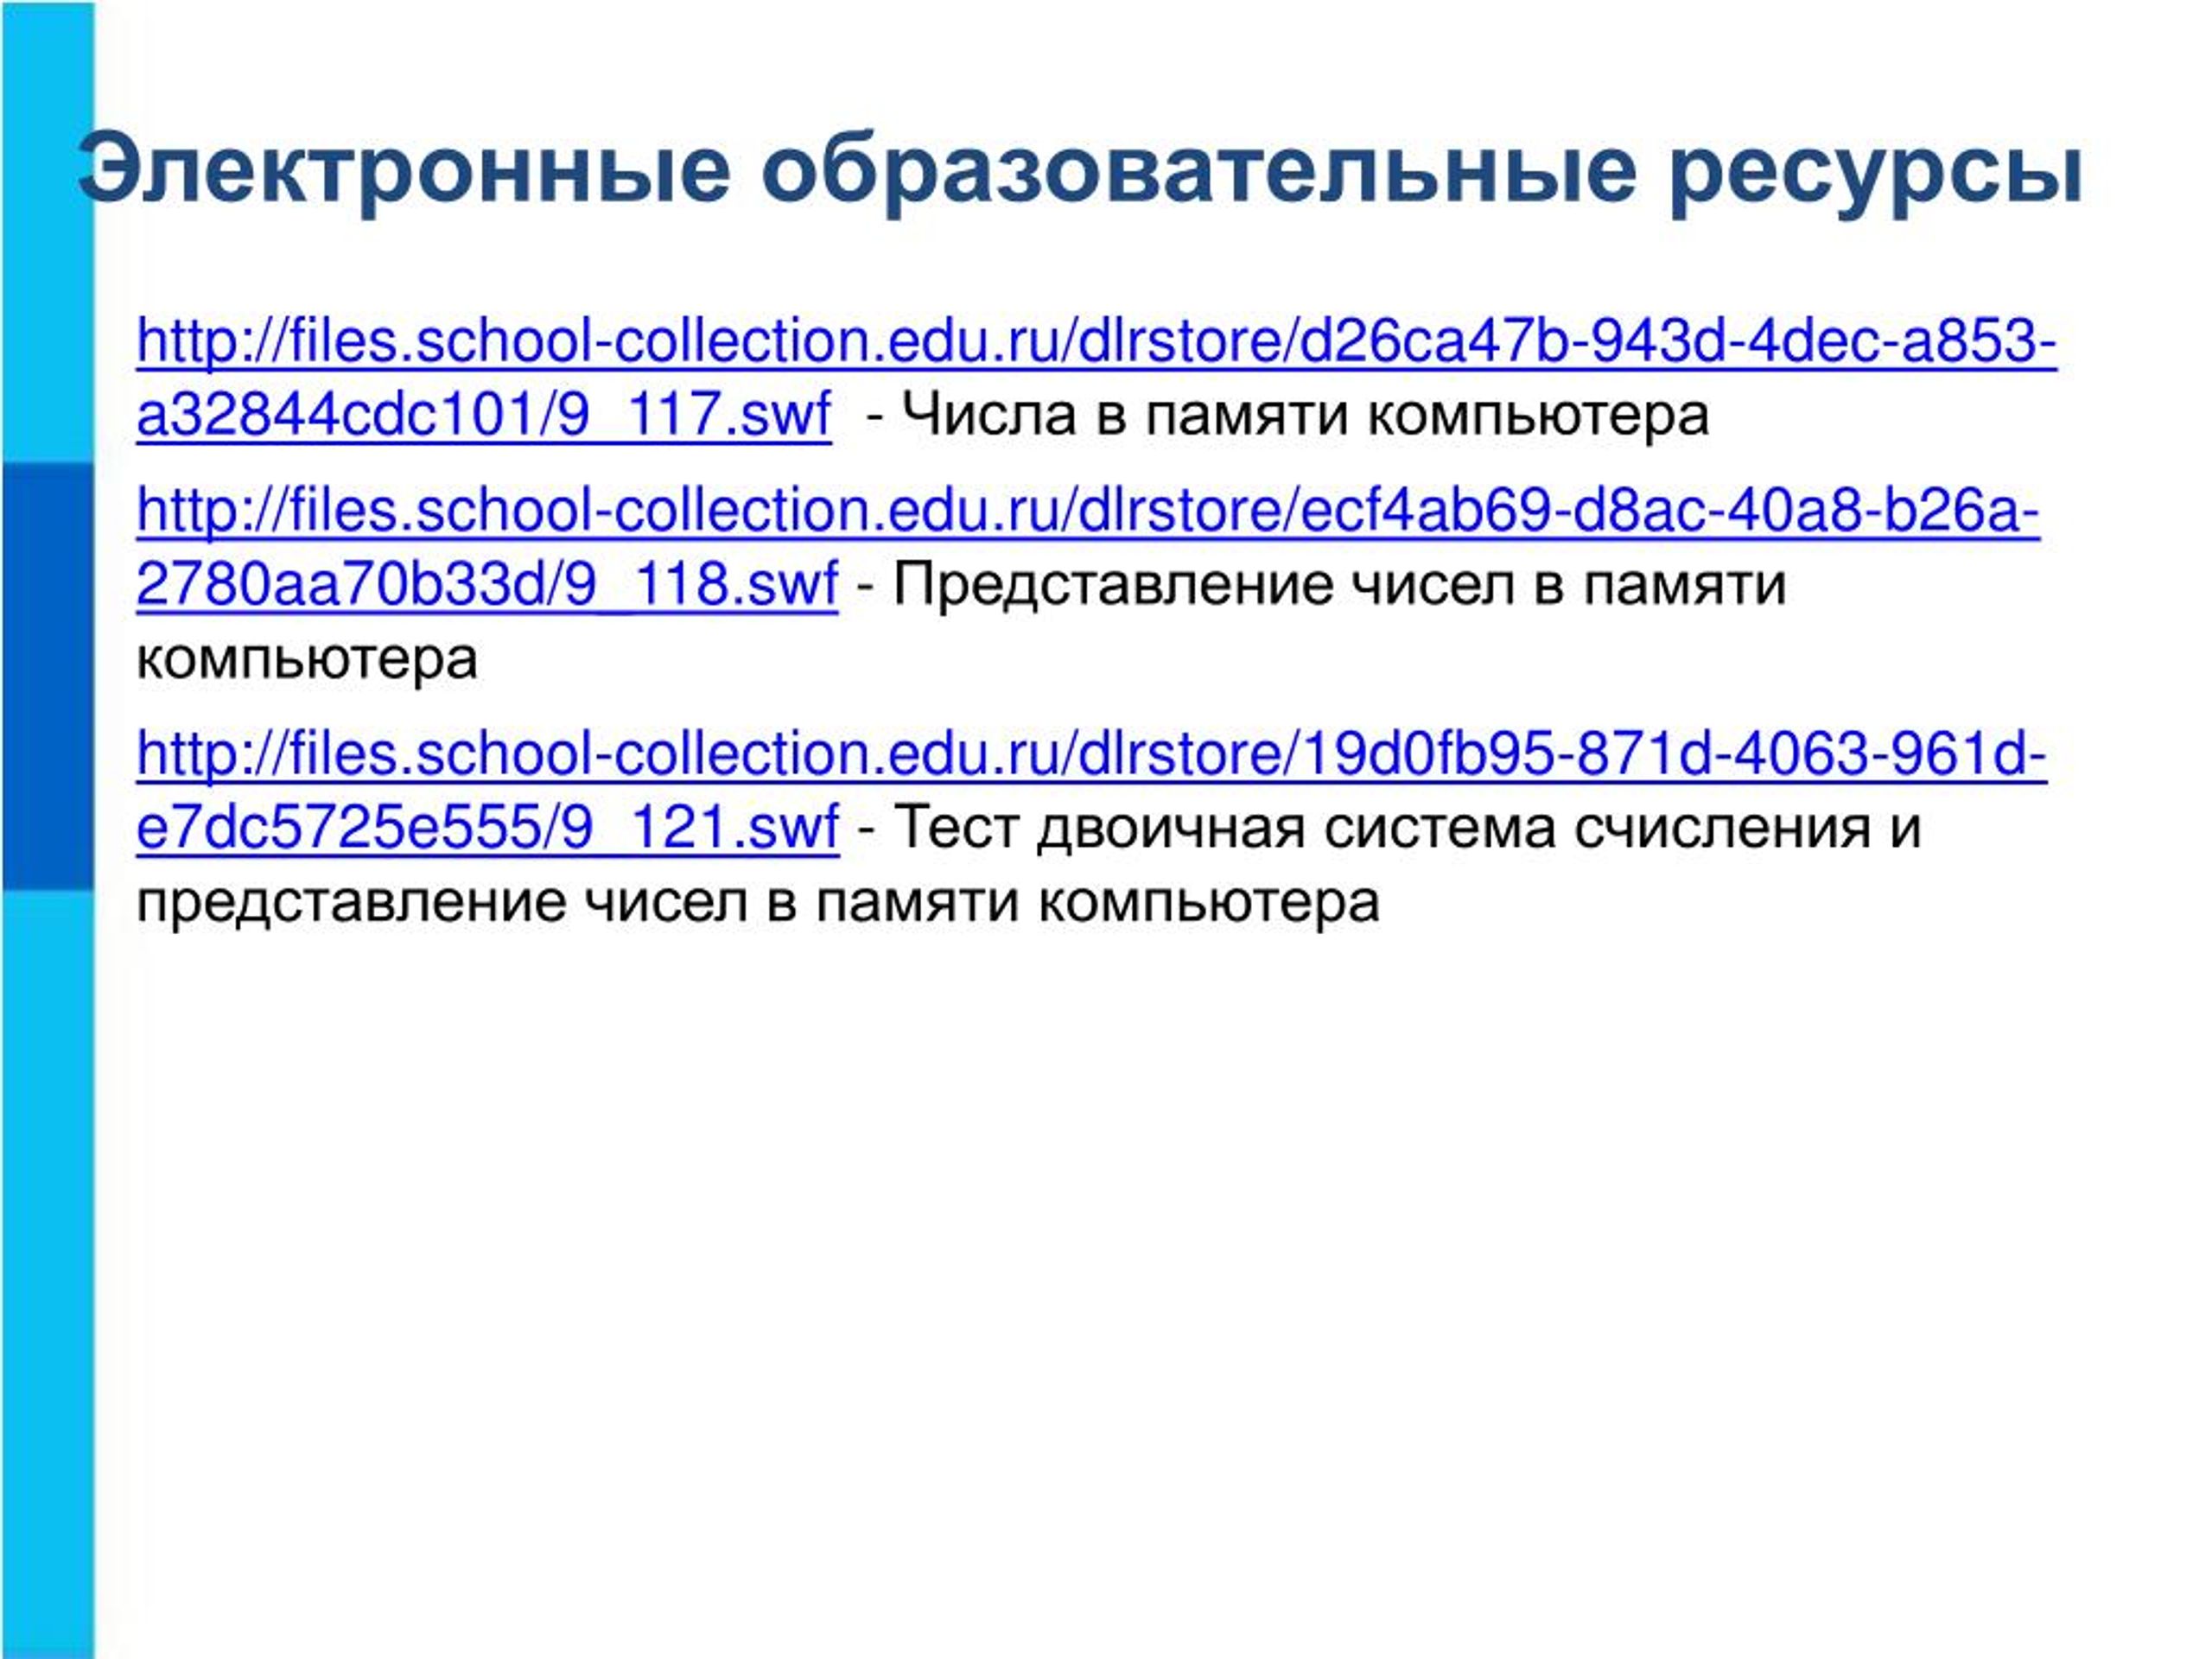 Files collection edu ru. ЭОР по истории.